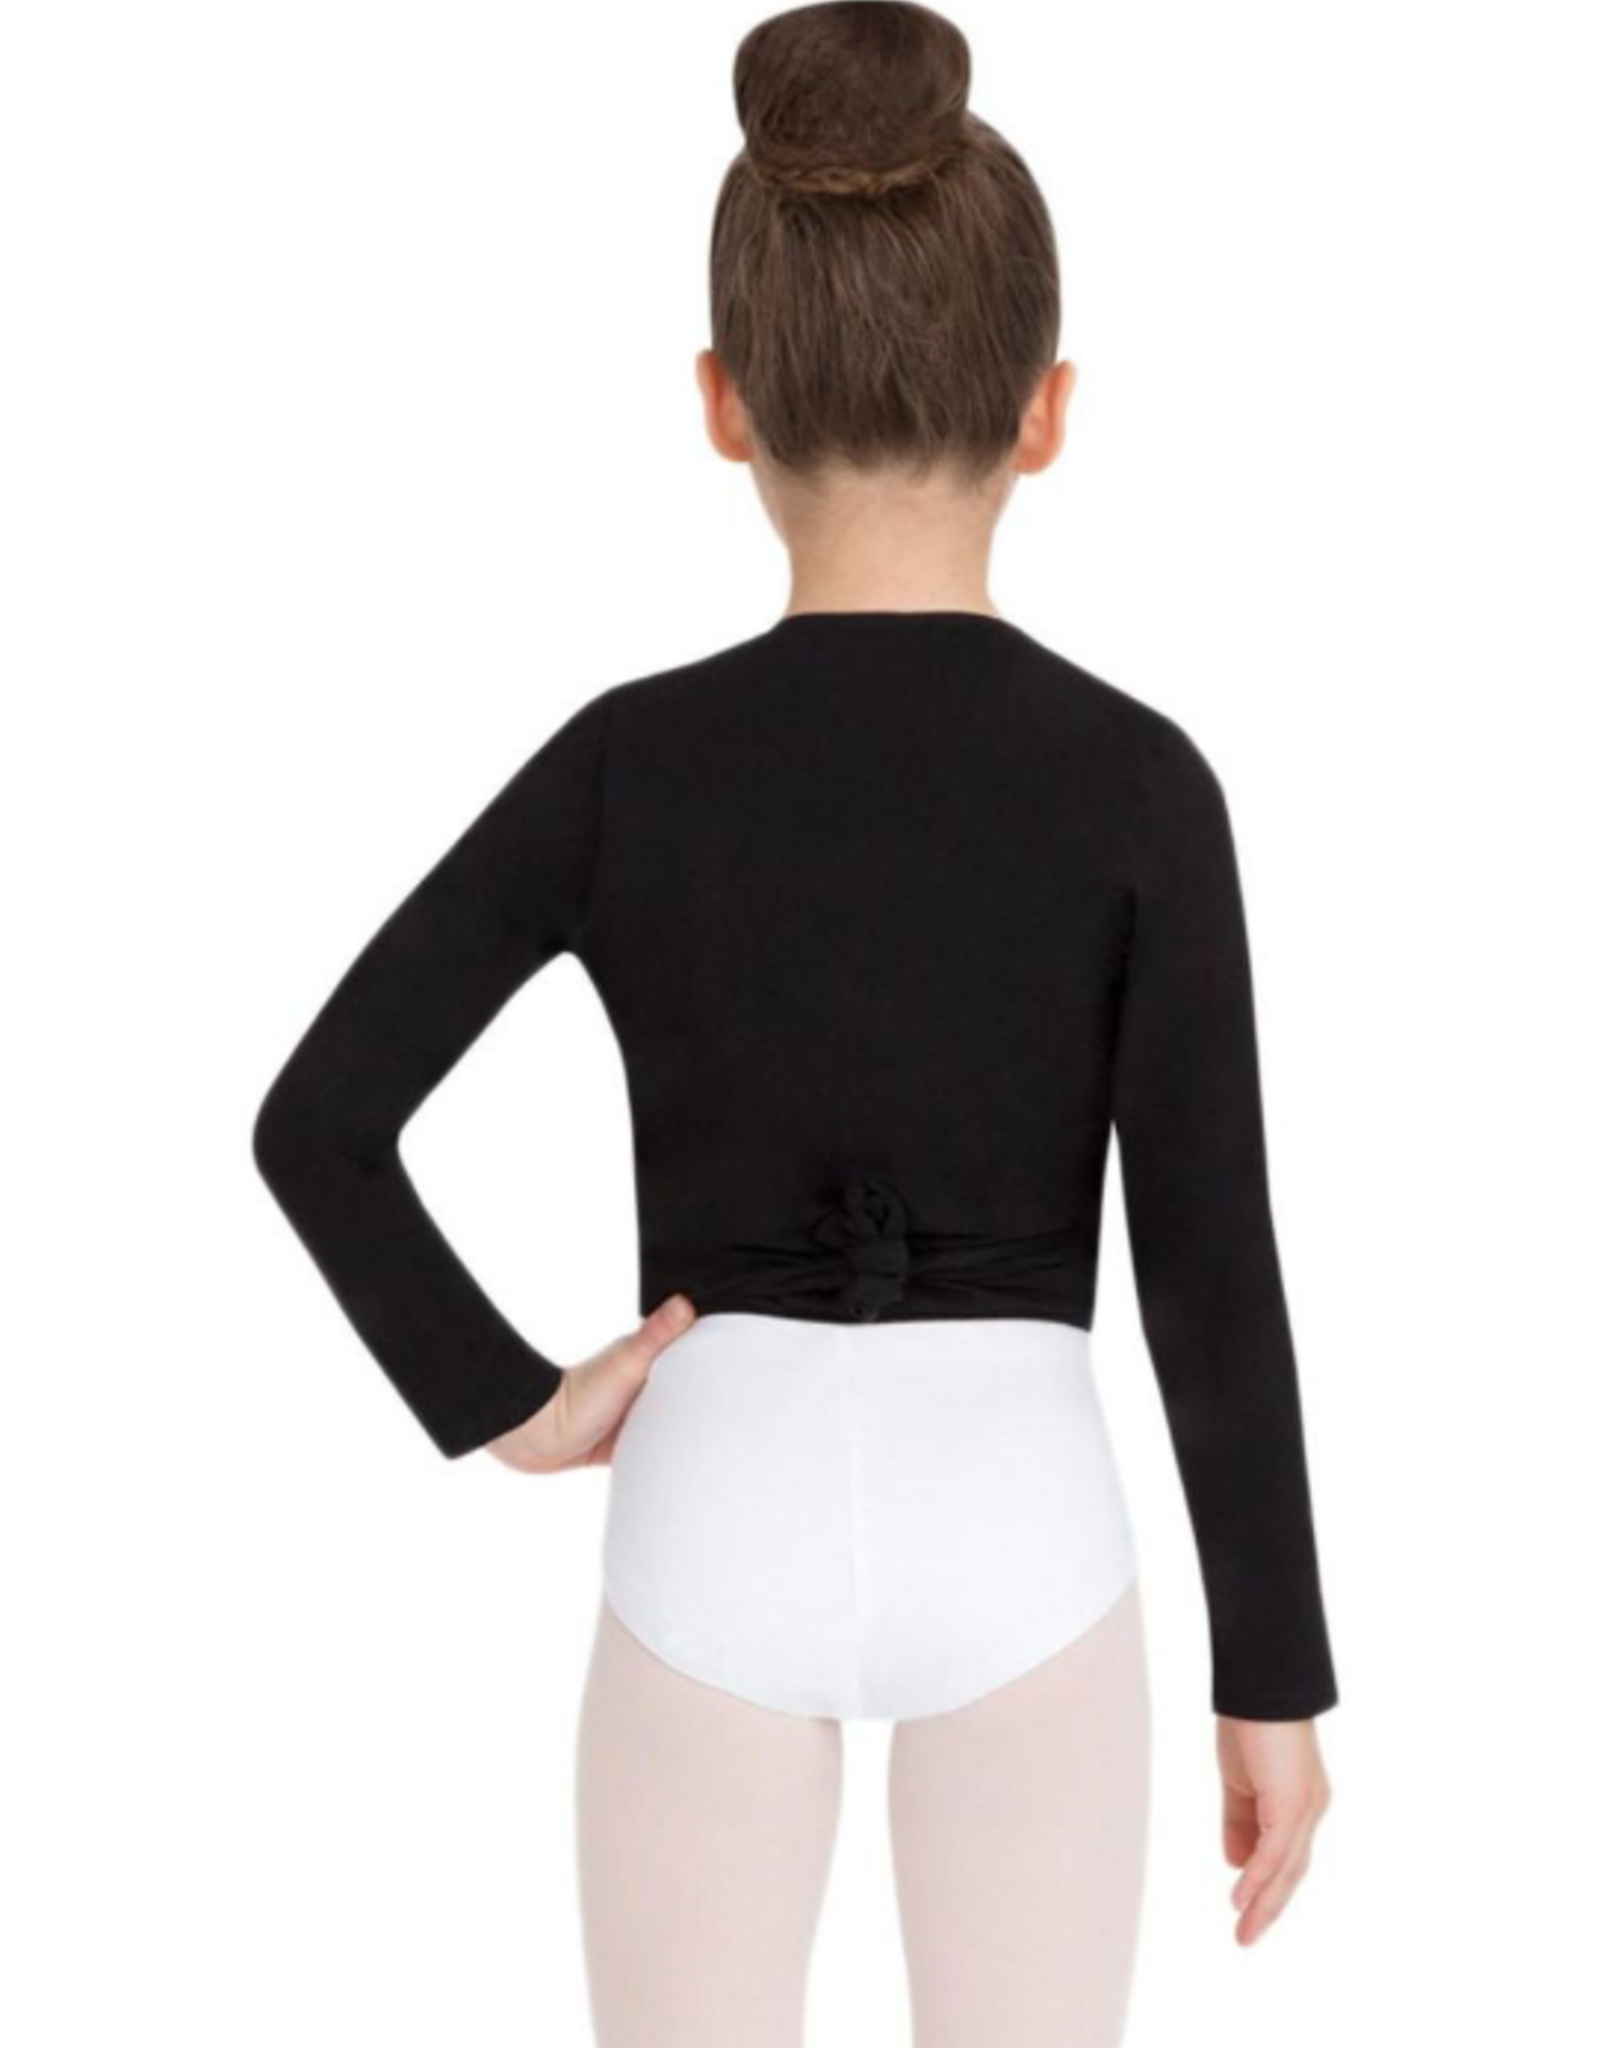 inlzdz Kids Girls Long/Short Sleeves/Sleeveless Crop Top Tight Shirt  Dancewear Athletic Ballet Dance Yoga Costume Black 6 : : Fashion